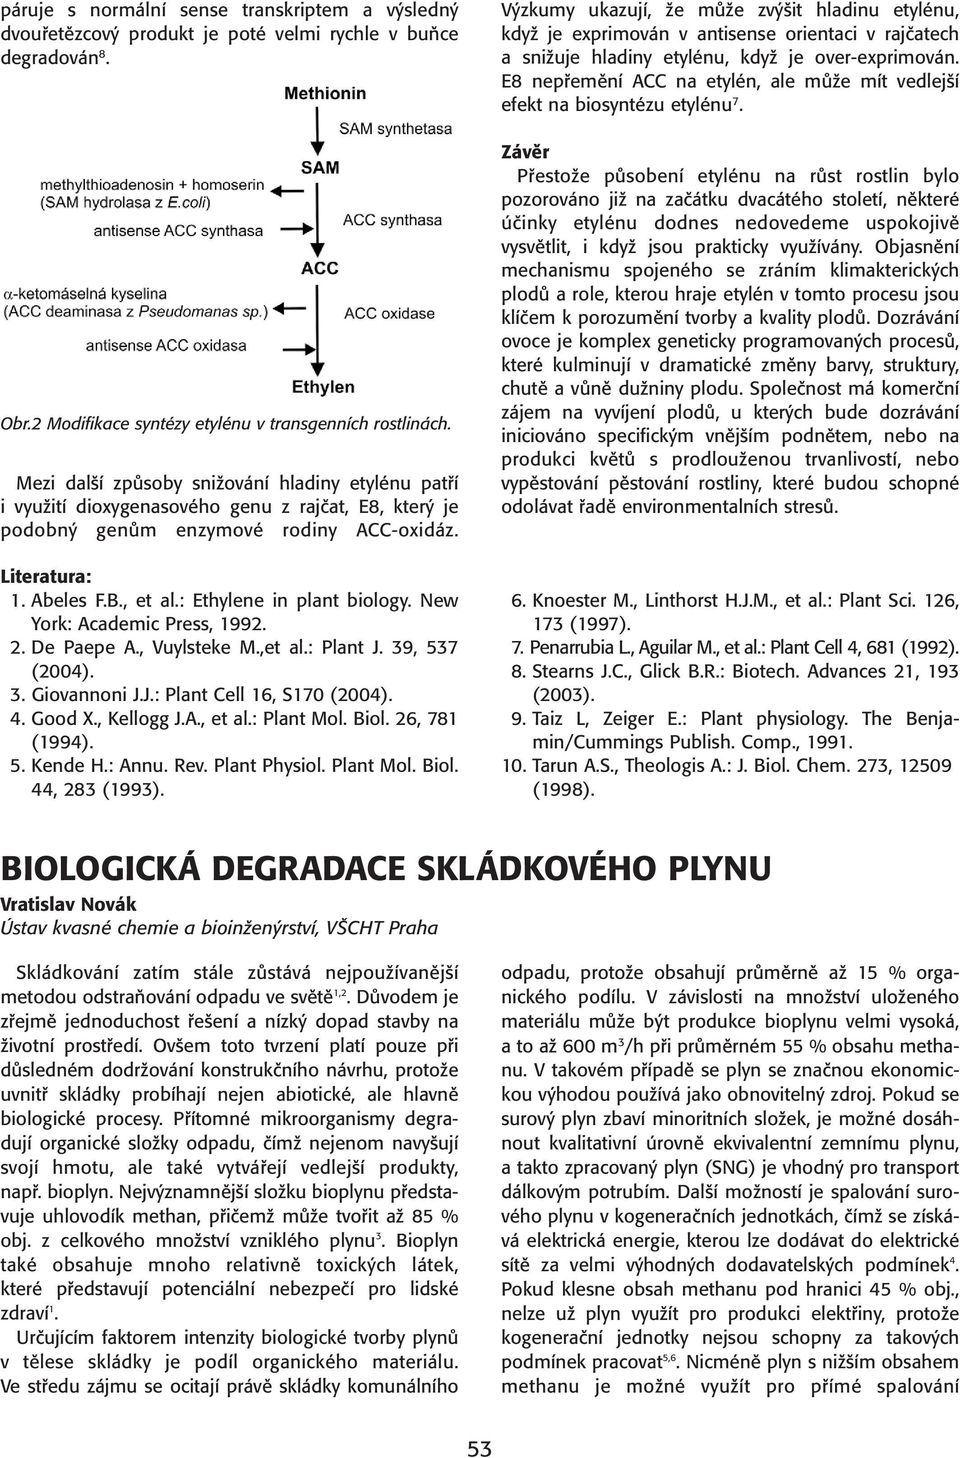 : Ethylene in plant biology. New York: Academic Press, 1992. 2. De Paepe A., Vuylsteke M.,et al.: Plant J. 39, 537 (2004). 3. Giovannoni J.J.: Plant Cell 16, S170 (2004). 4. Good X., Kellogg J.A., et al.